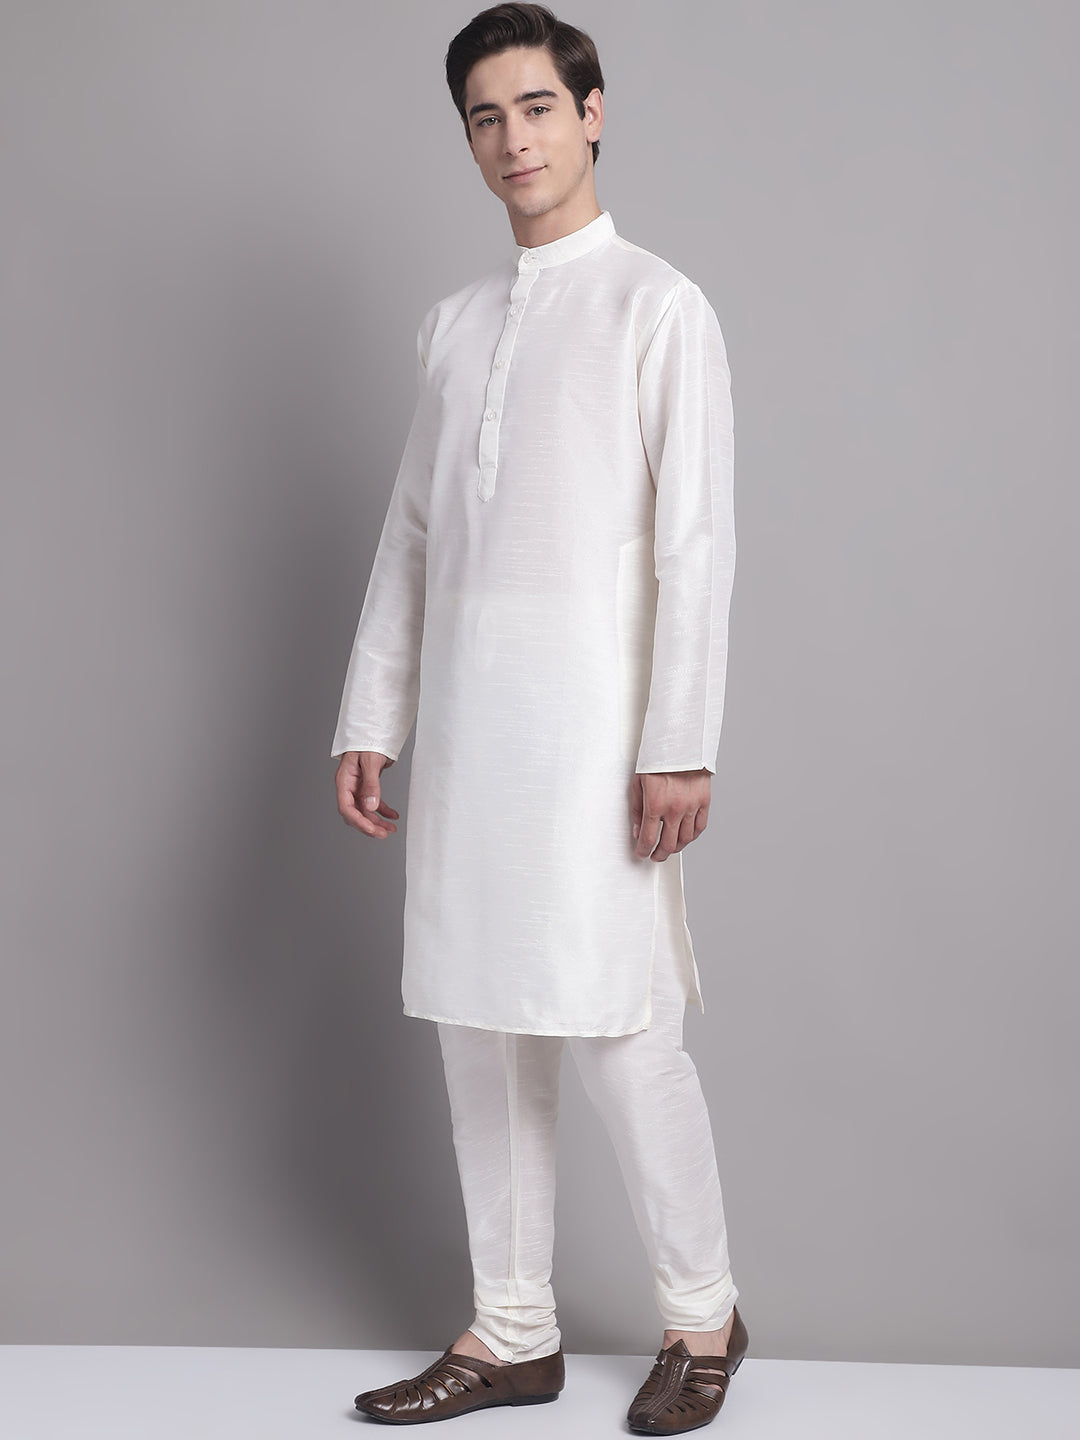 Men's Cream Printed Nehru Jacket With Solid Kurta Pyjama.